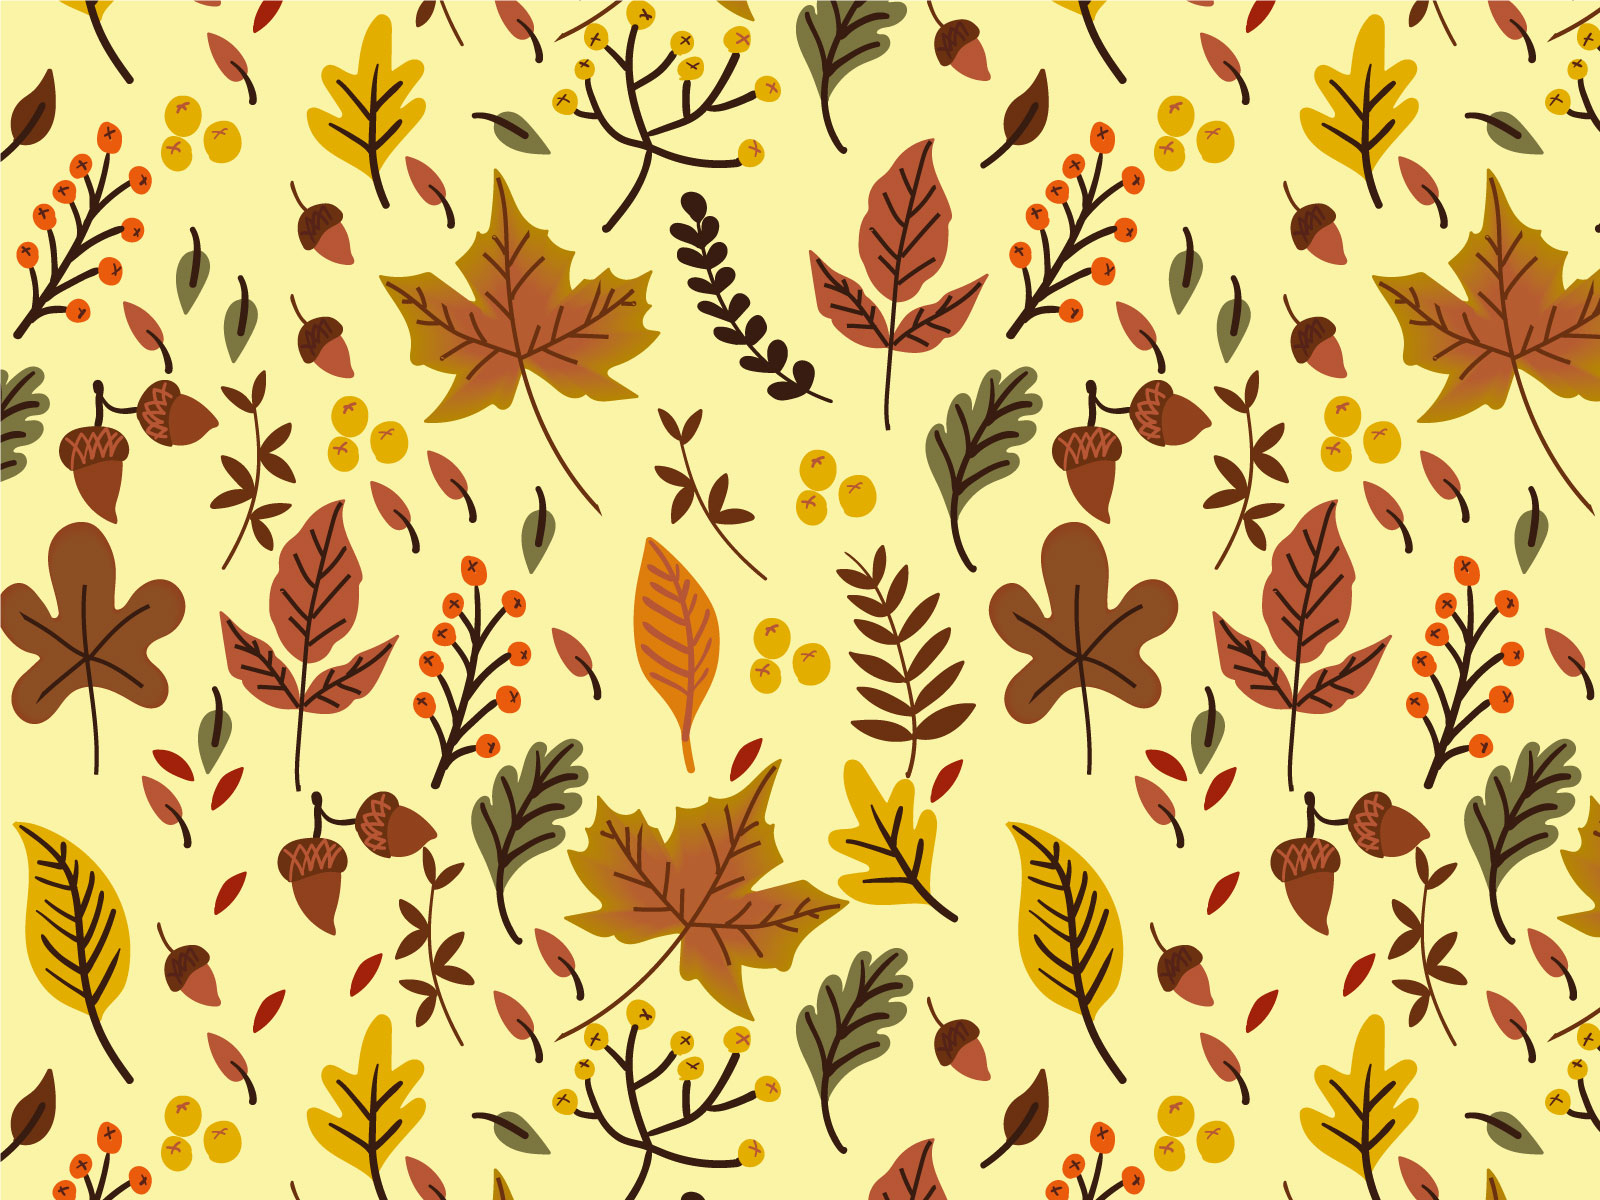 Autumn pattern by stefano gallorini on Dribbble